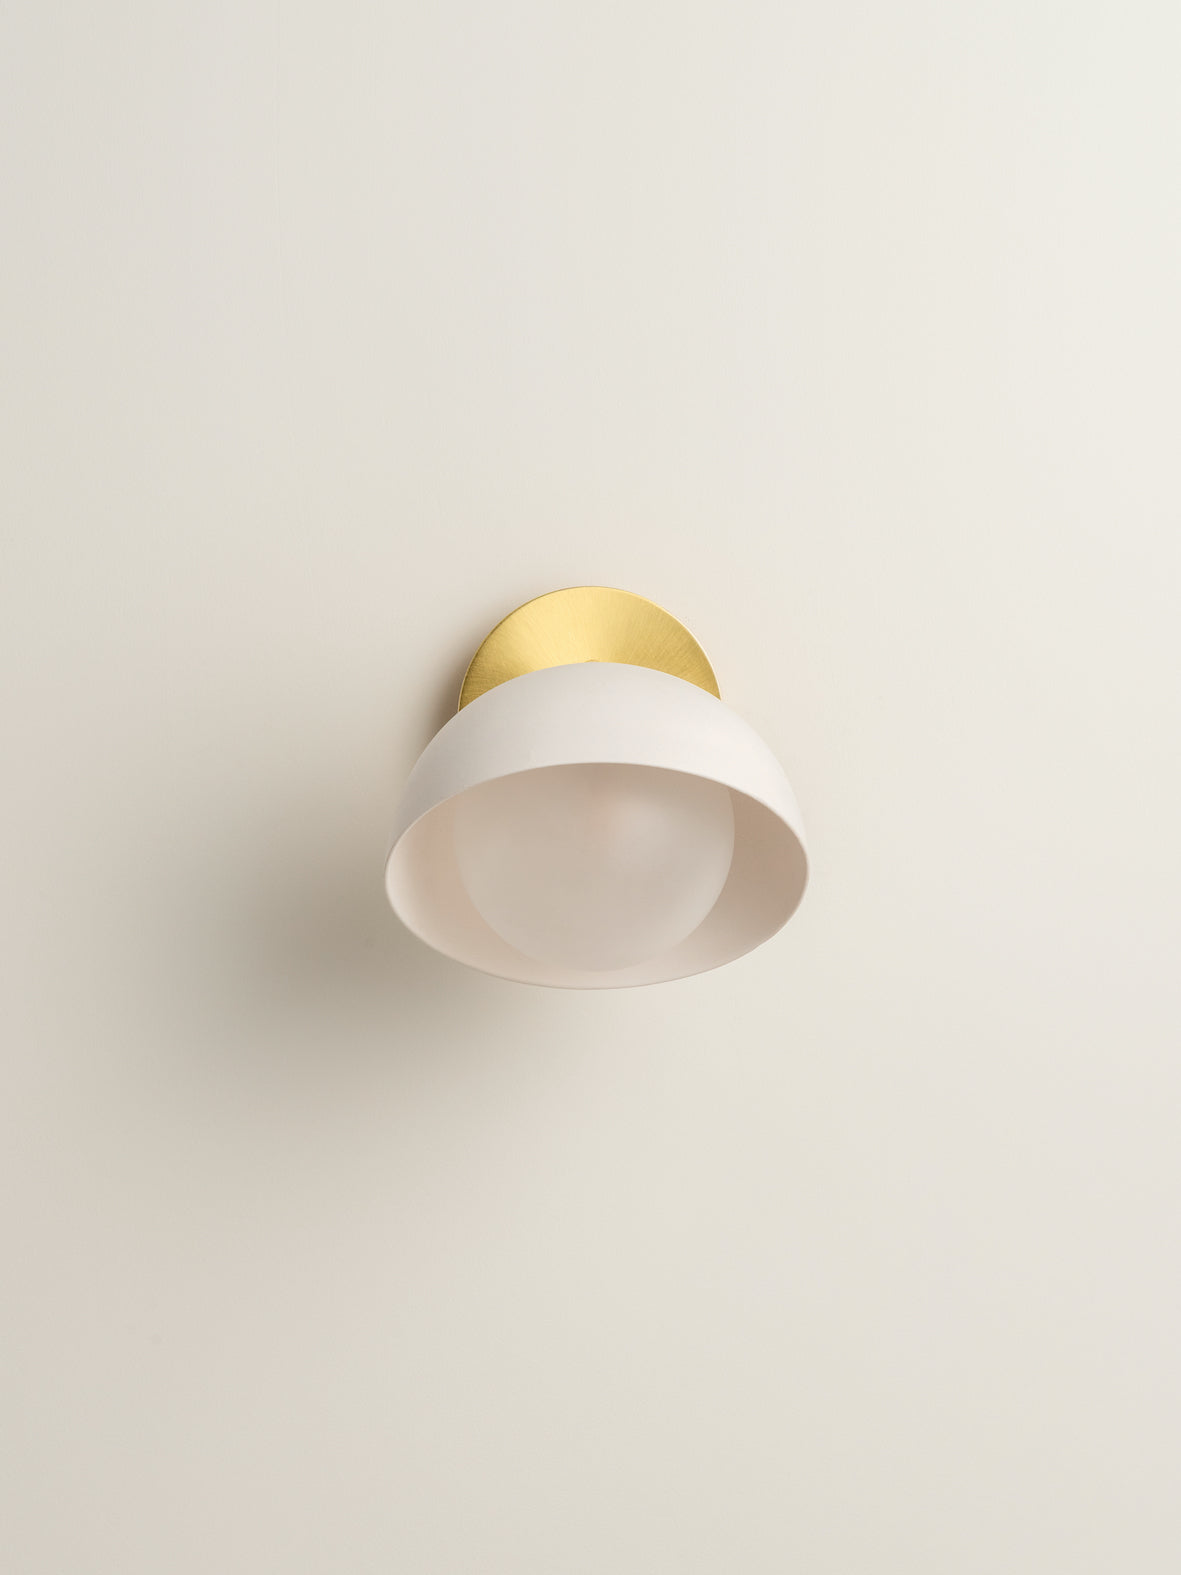 Porsa - 1 light brushed brass and warm white porcelain wall light | Wall Light | Lights & Lamps | UK | Modern Affordable Designer Lighting